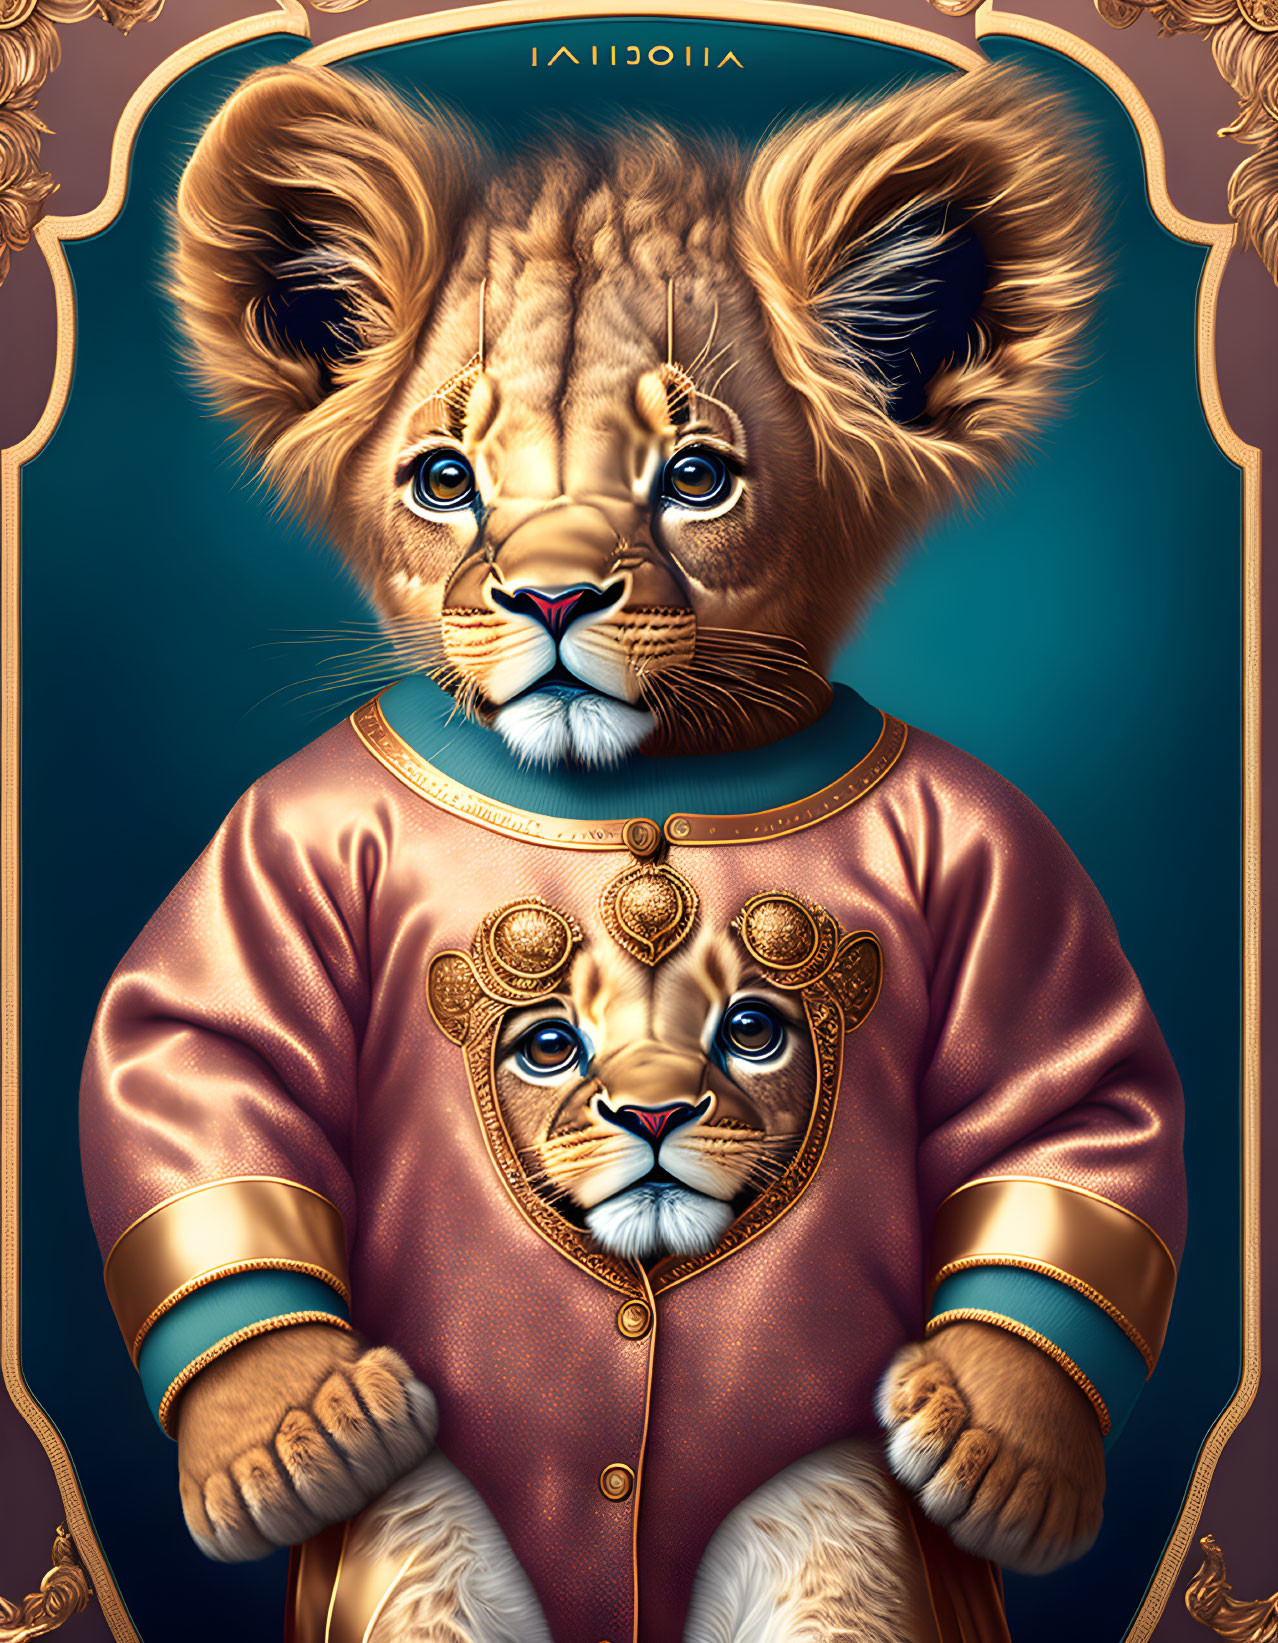 goodnight little lion cub